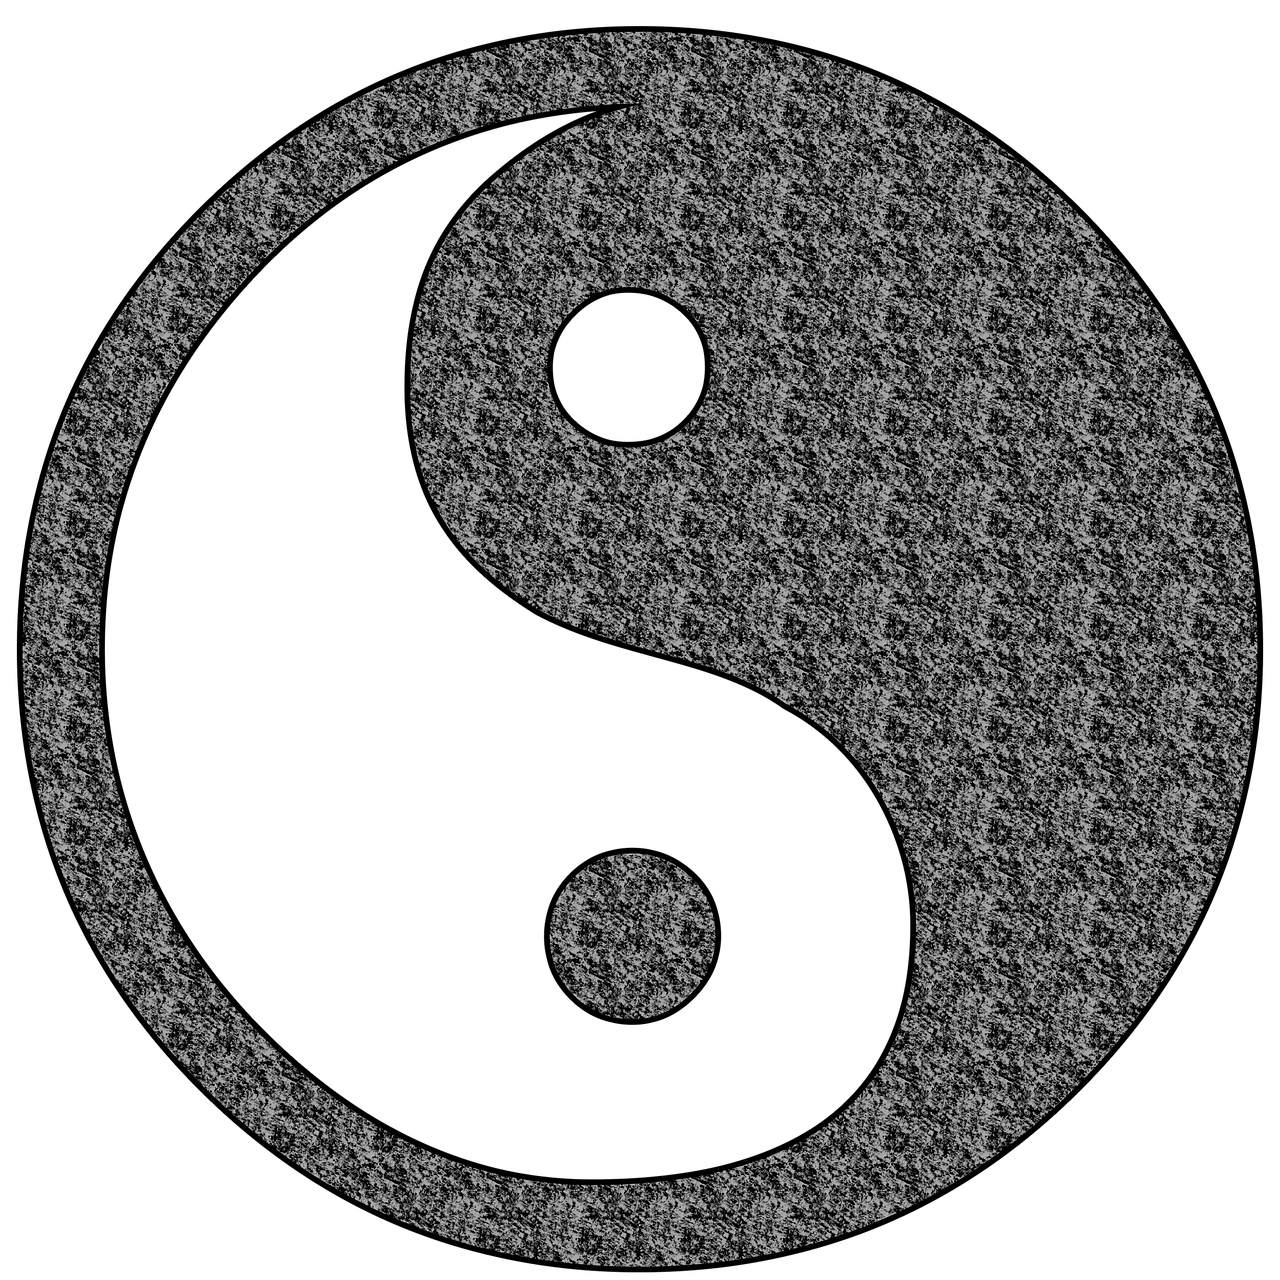 Download free photo of Yin and yang,yin,yang,balance,harmony - from